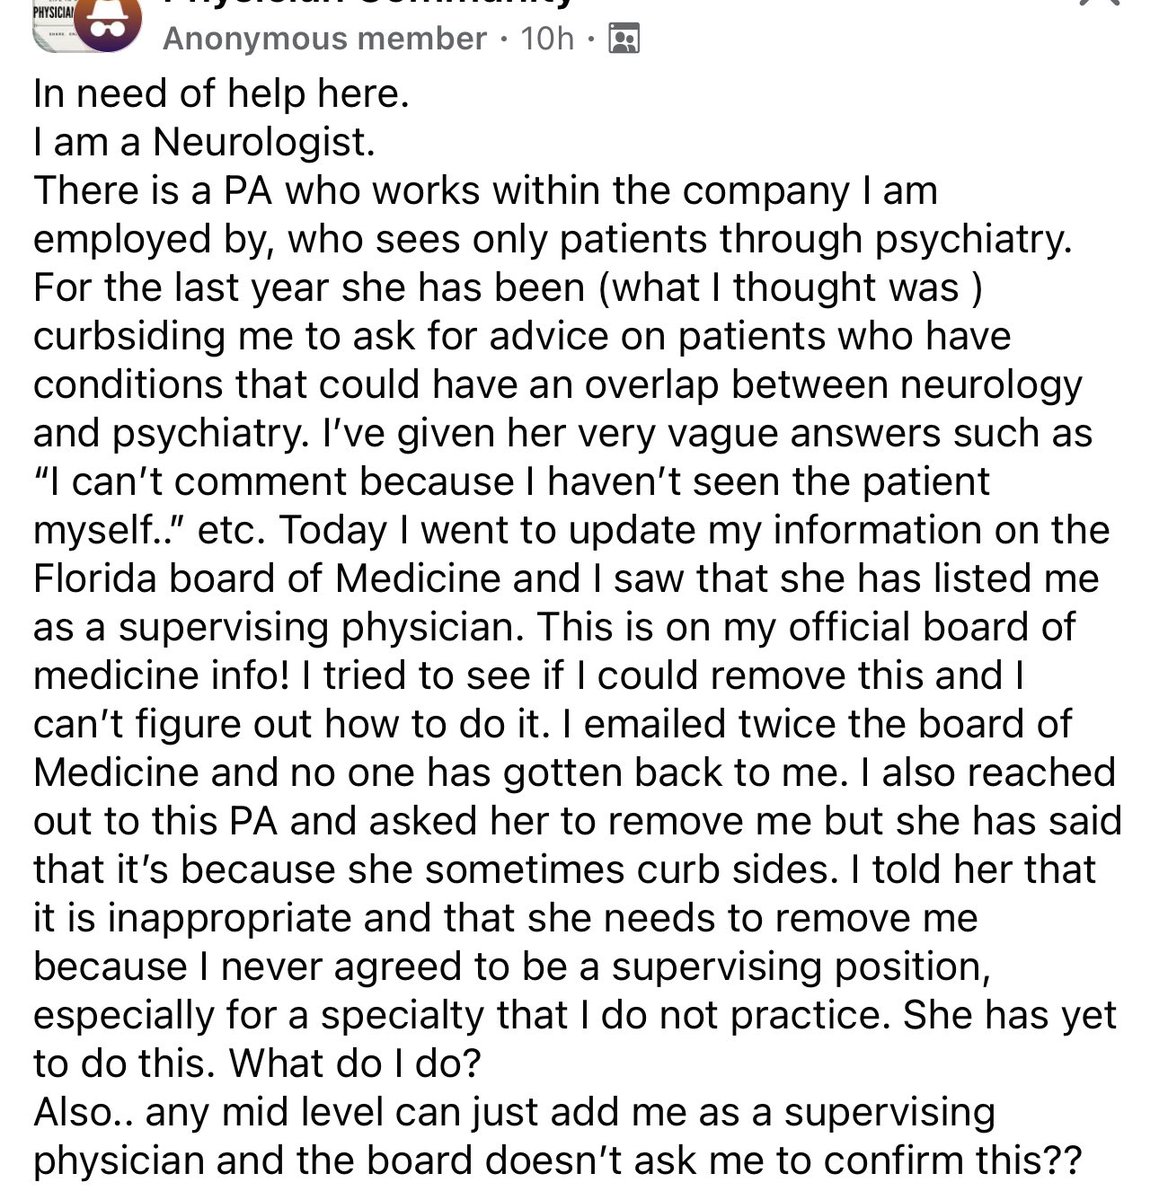 PA lists neurologist as supervising physician 

#MedTwitter
#StopScopeCreep